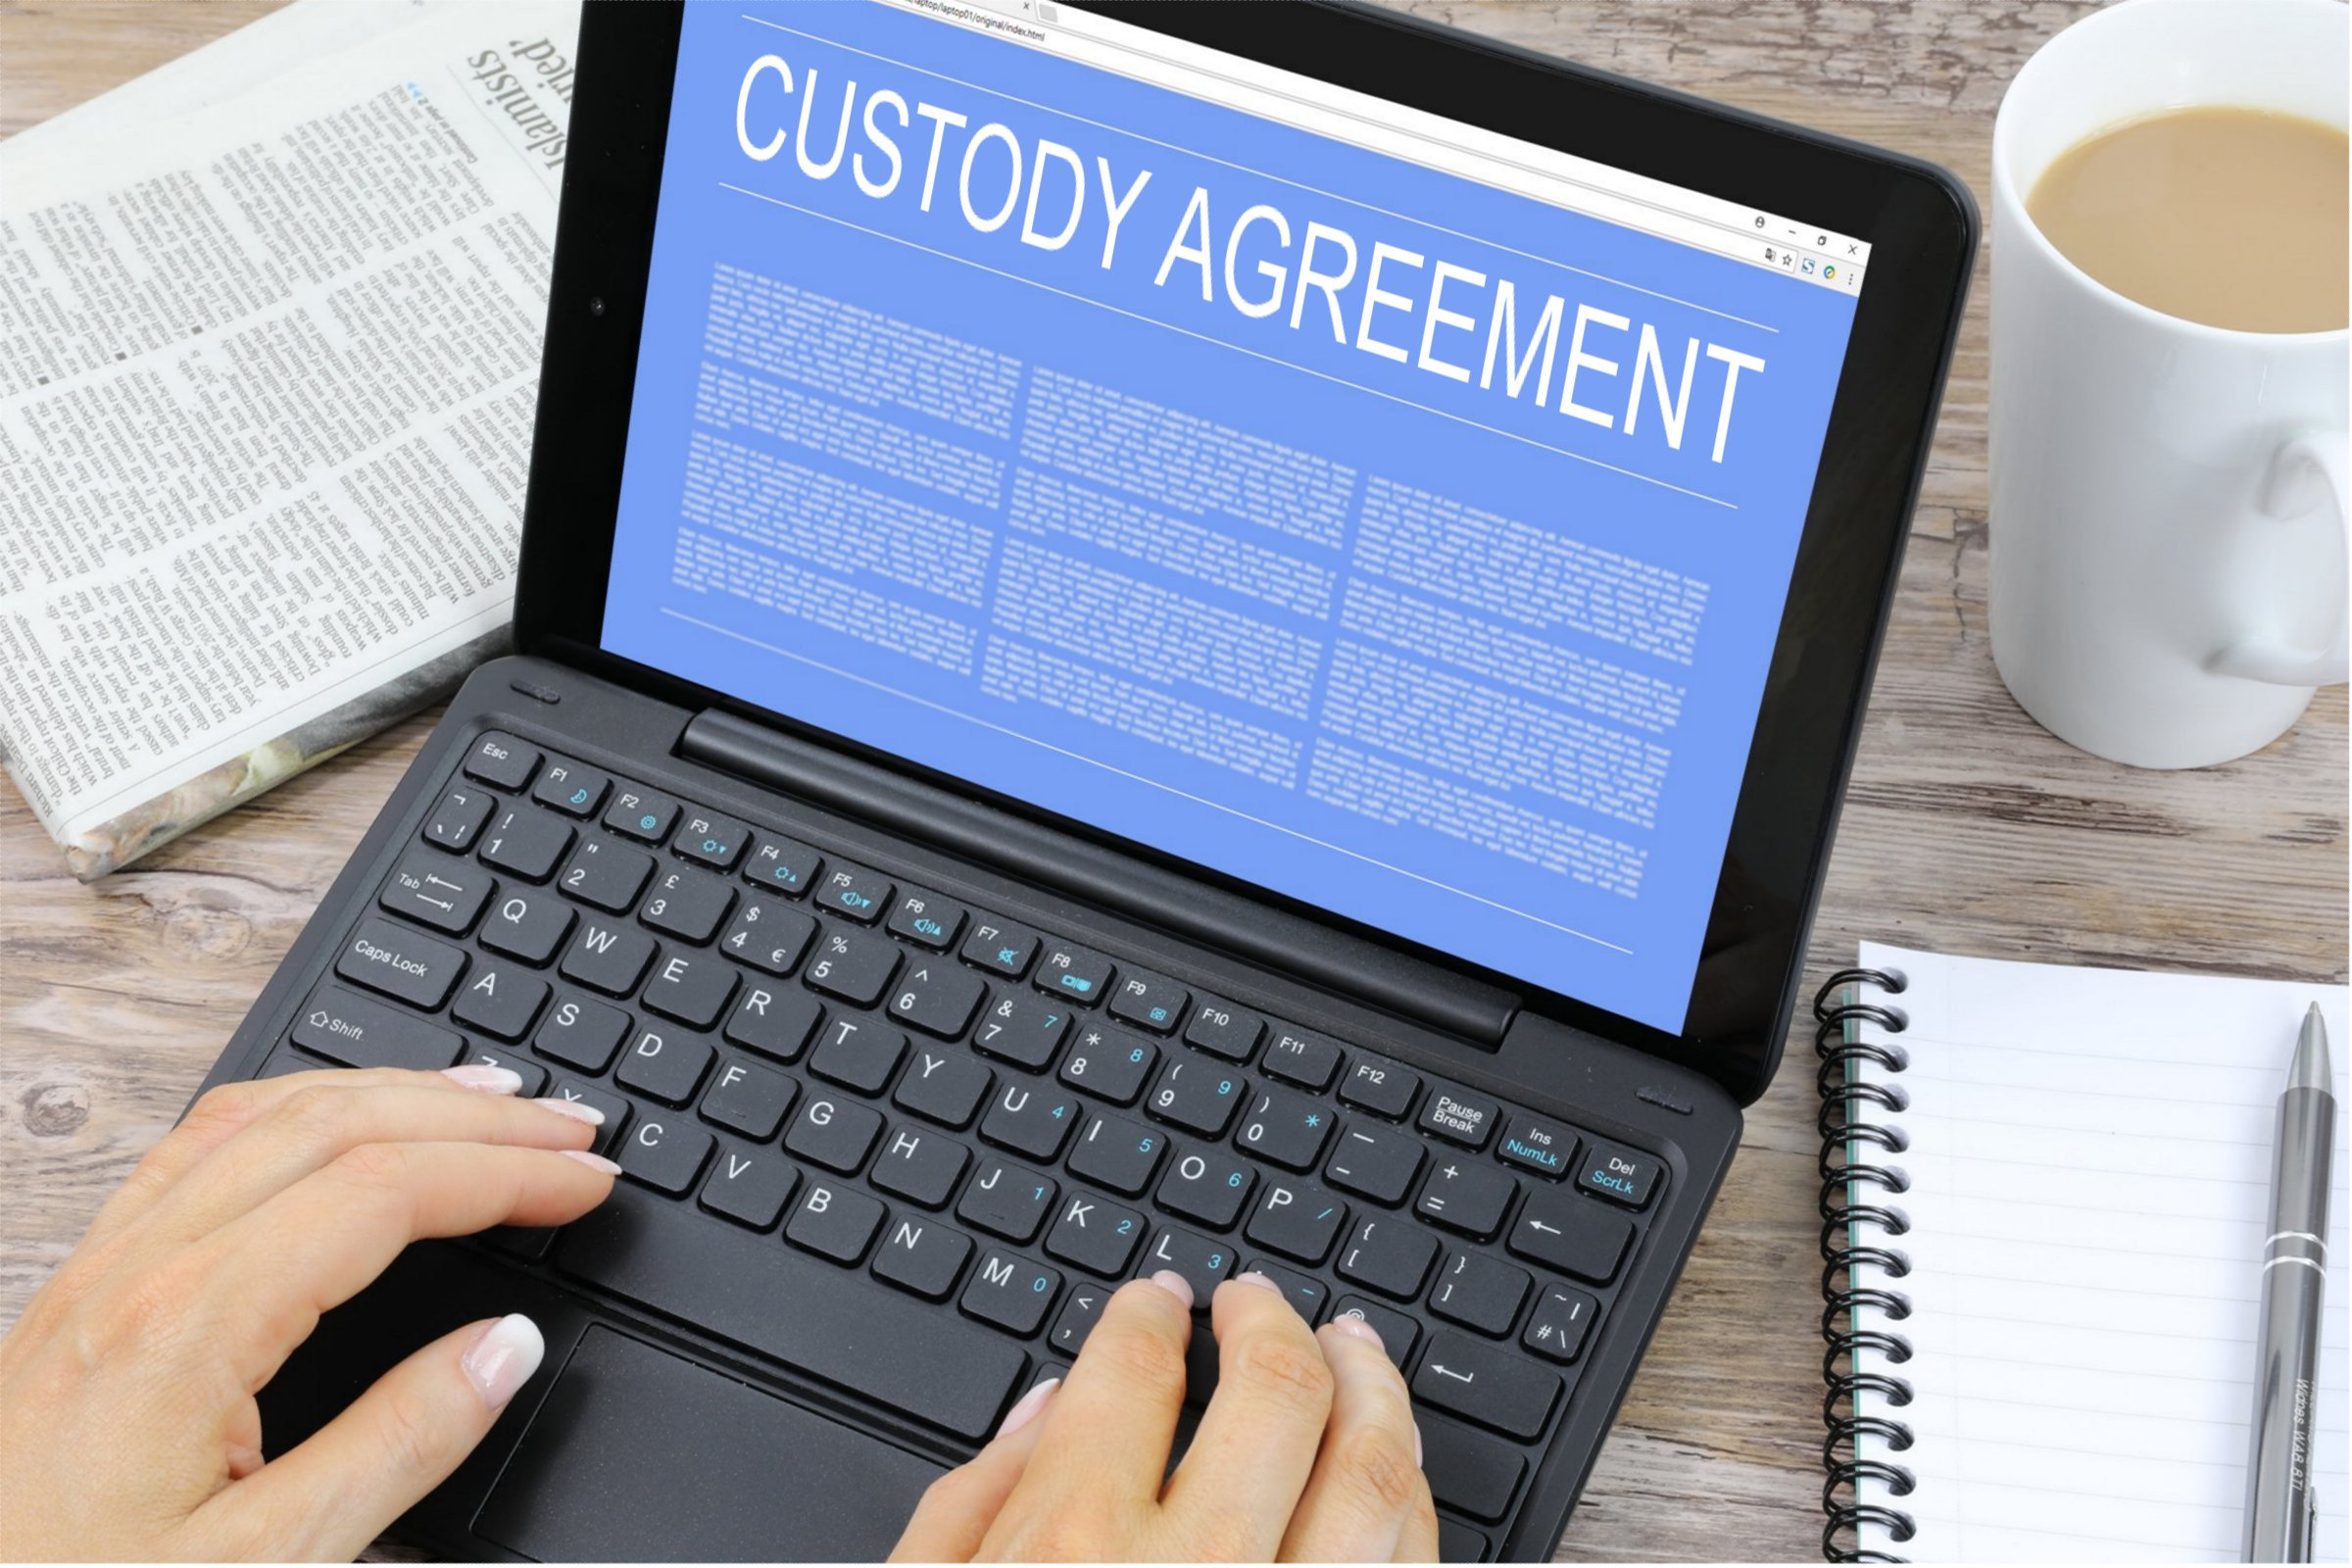 custody agreement